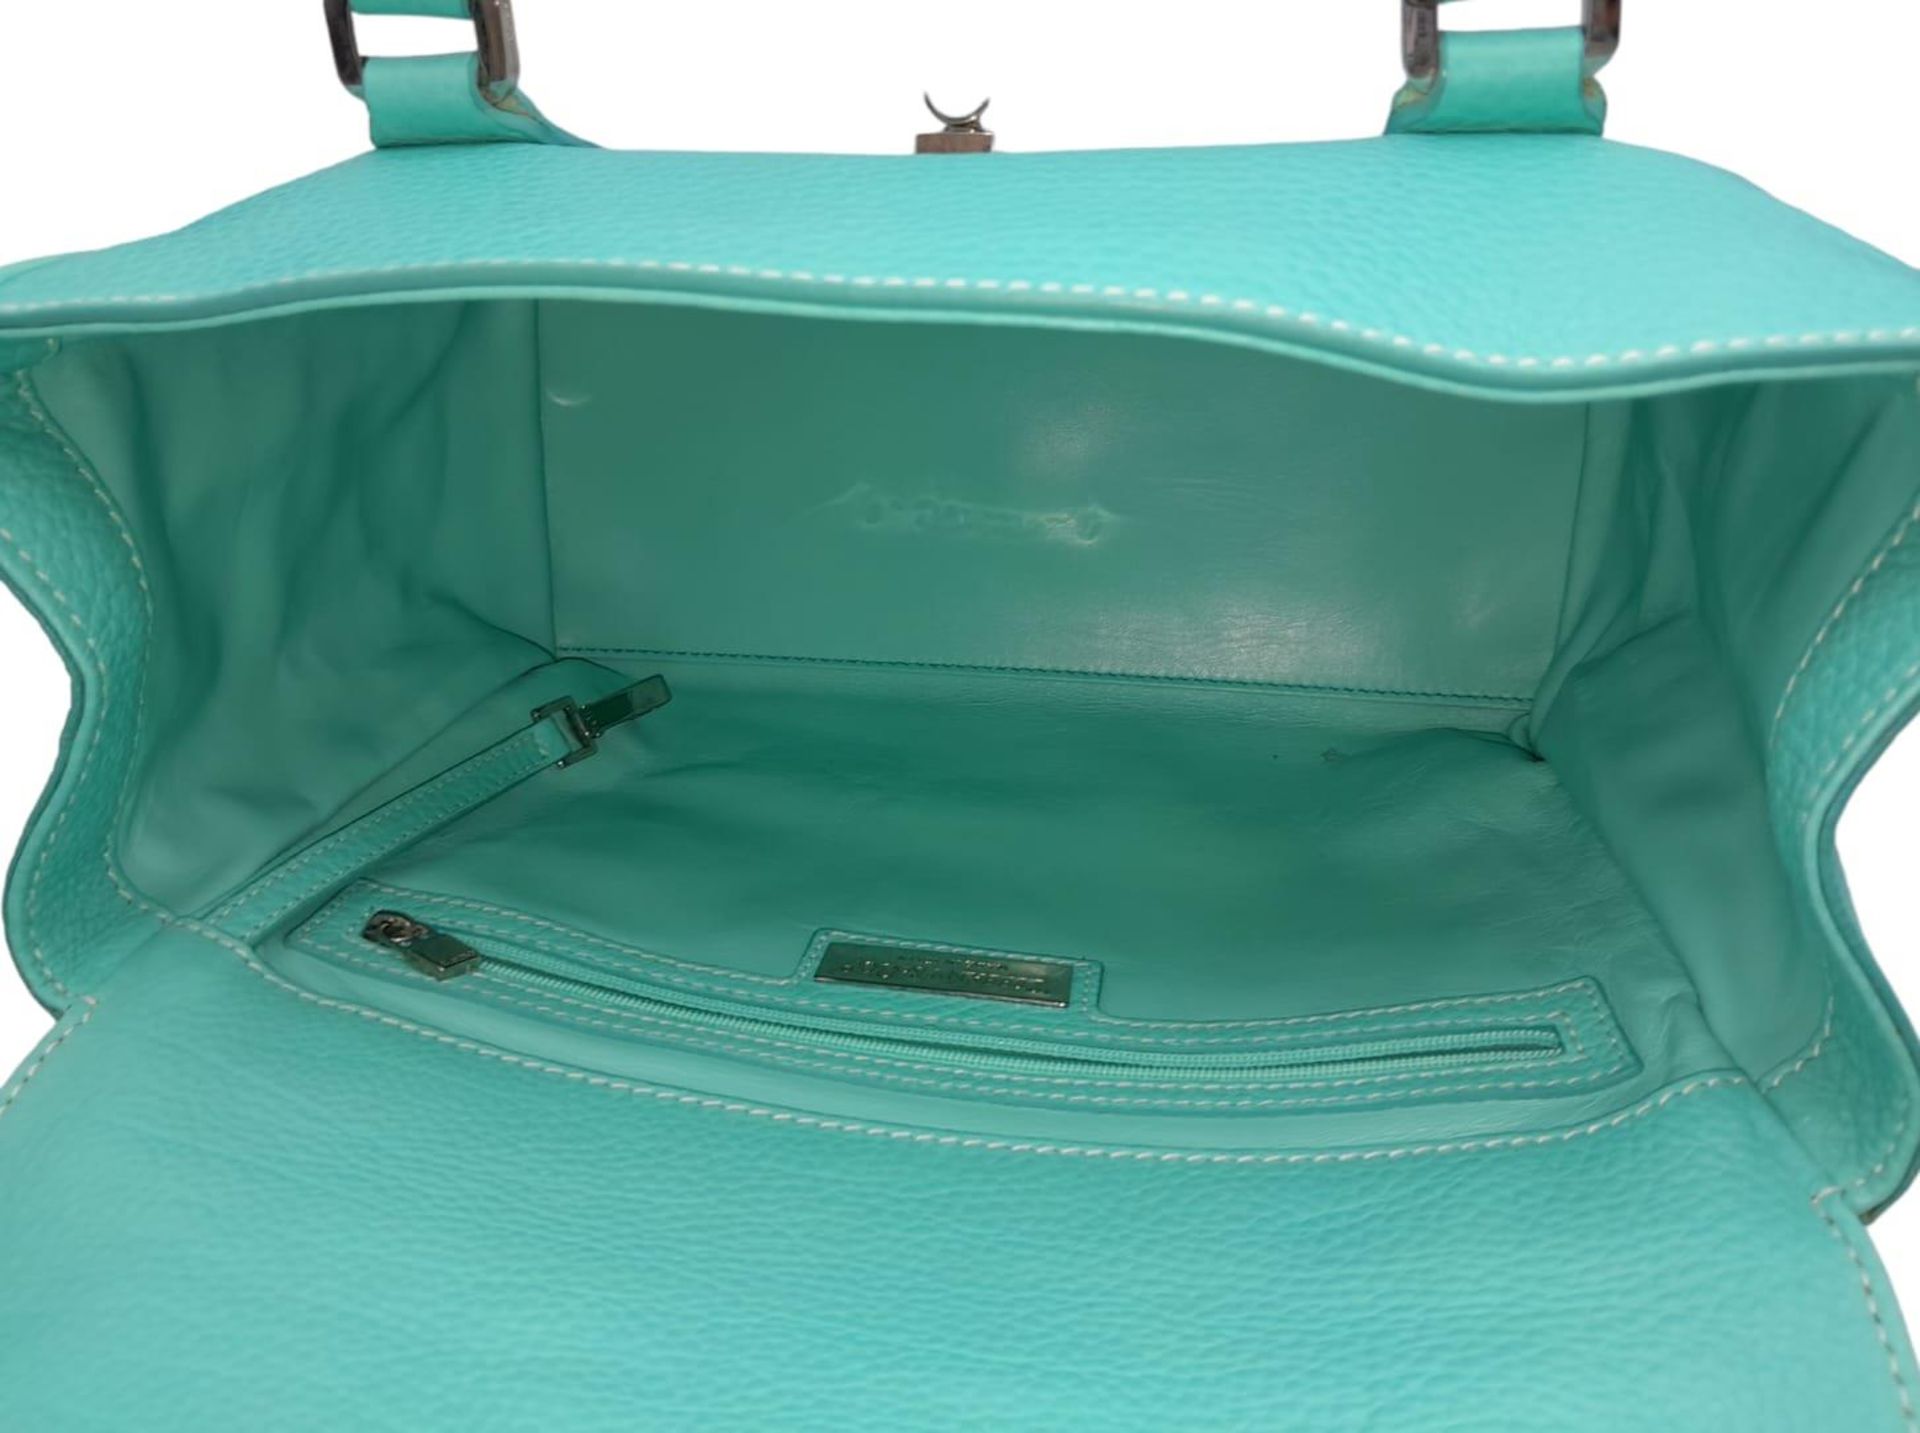 A Tiffany & Co. 'Manhattan' Satchel Handbag. The iconic 'Tiffany blue' leather exterior with - Bild 6 aus 11